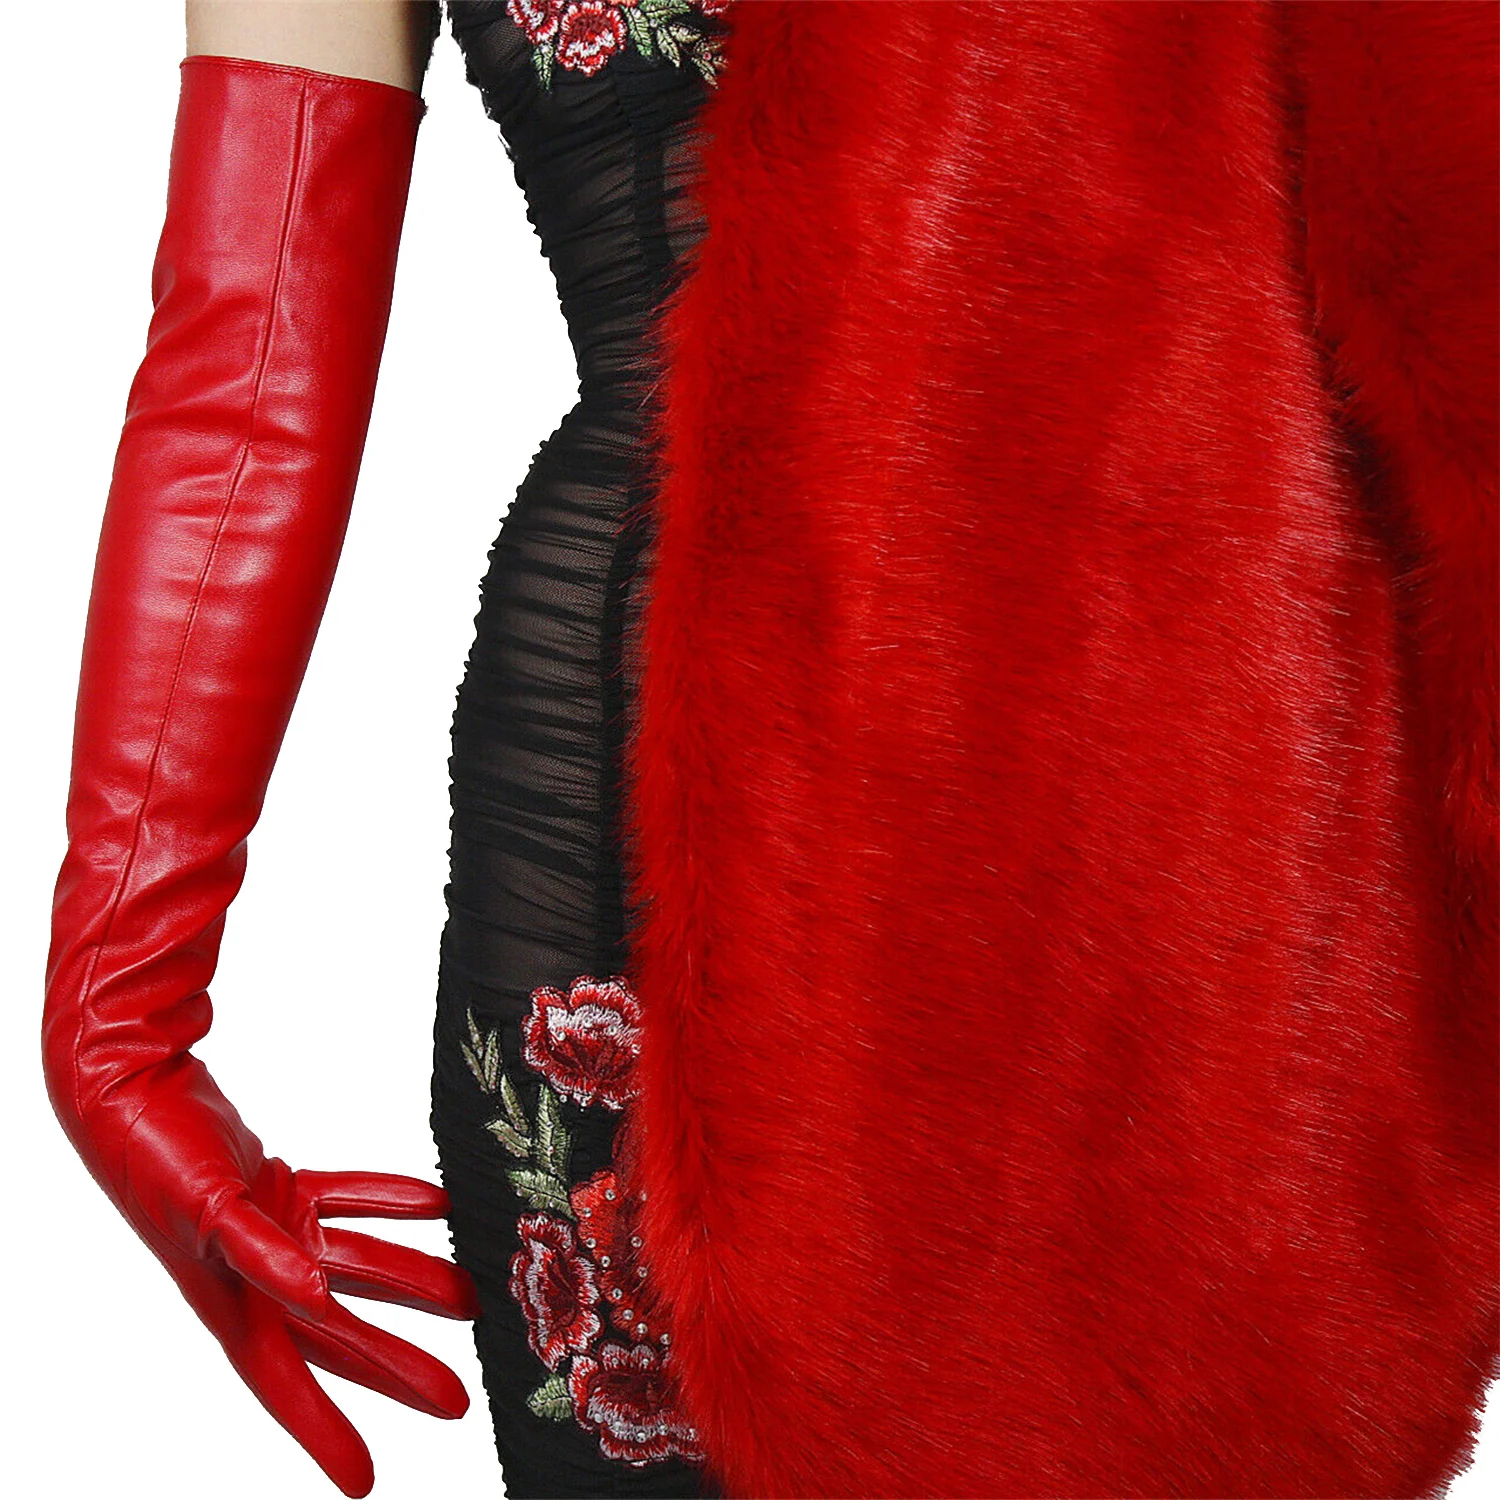 

DooWay Women's Super Long Gloves Red Faux Patent PU Sexy Opera Glossy Cosplay Halloween Nightclub Costume Dressing Finger Glove